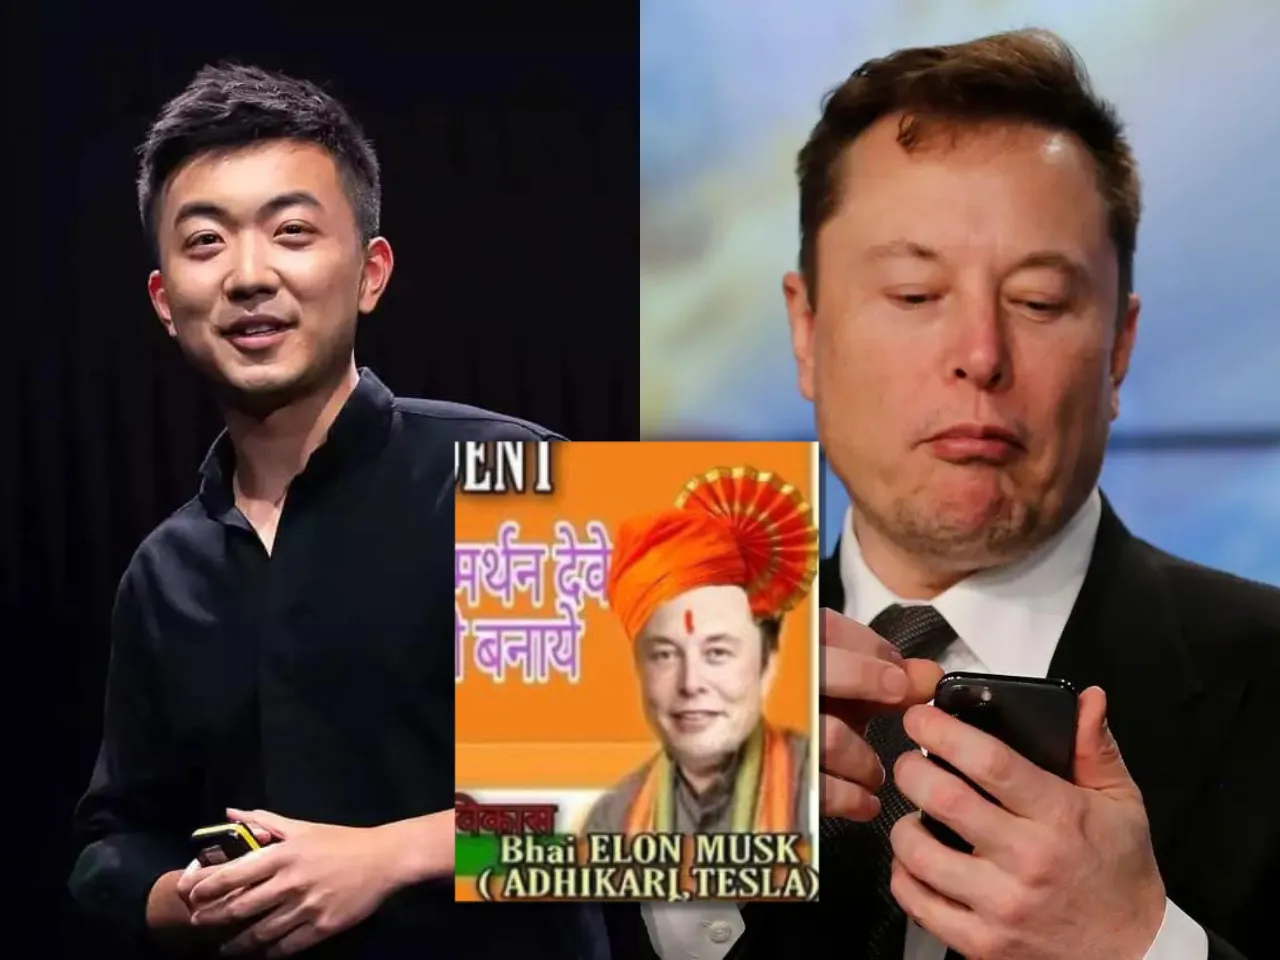 Nothing CEO Carl Bhai advises Musk to change name to 'Elon Bhai'